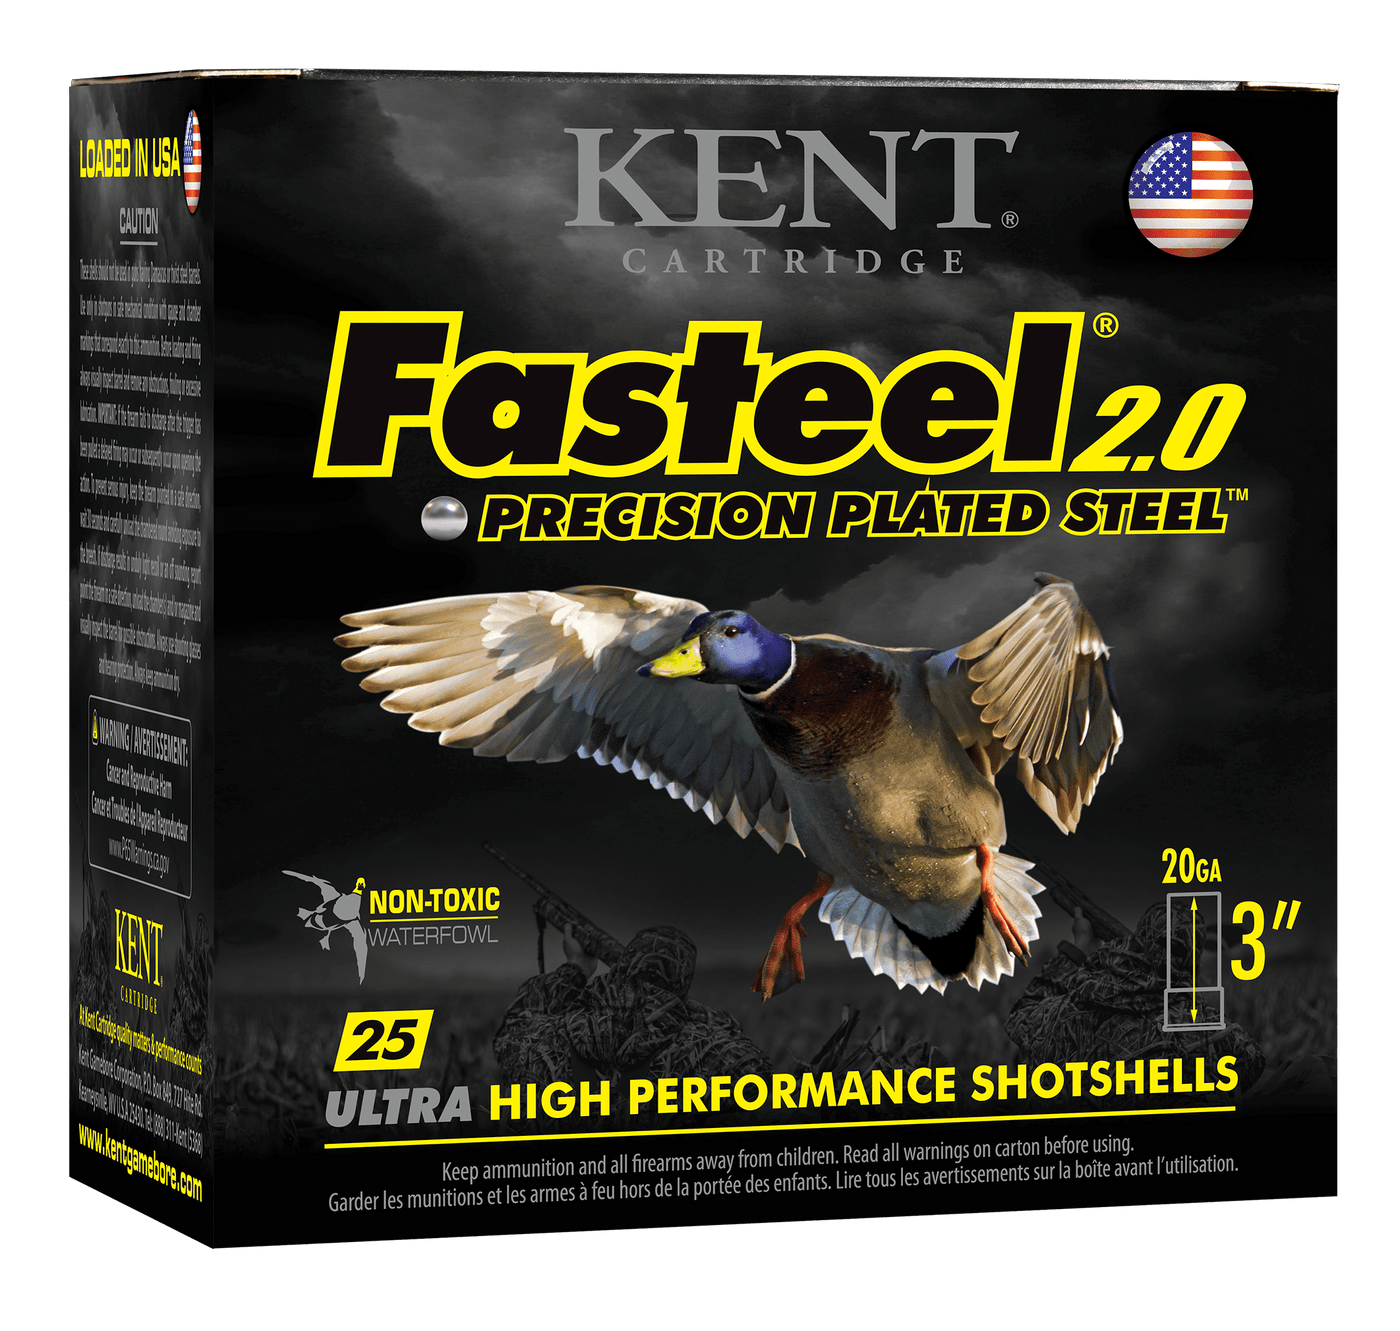 Kent Cartridge Kent Fasteel 2.0 Precision Plated Steel Load 20 Ga. 3 In. 7/8 Oz. 3 Shot 25 Rd. Ammo